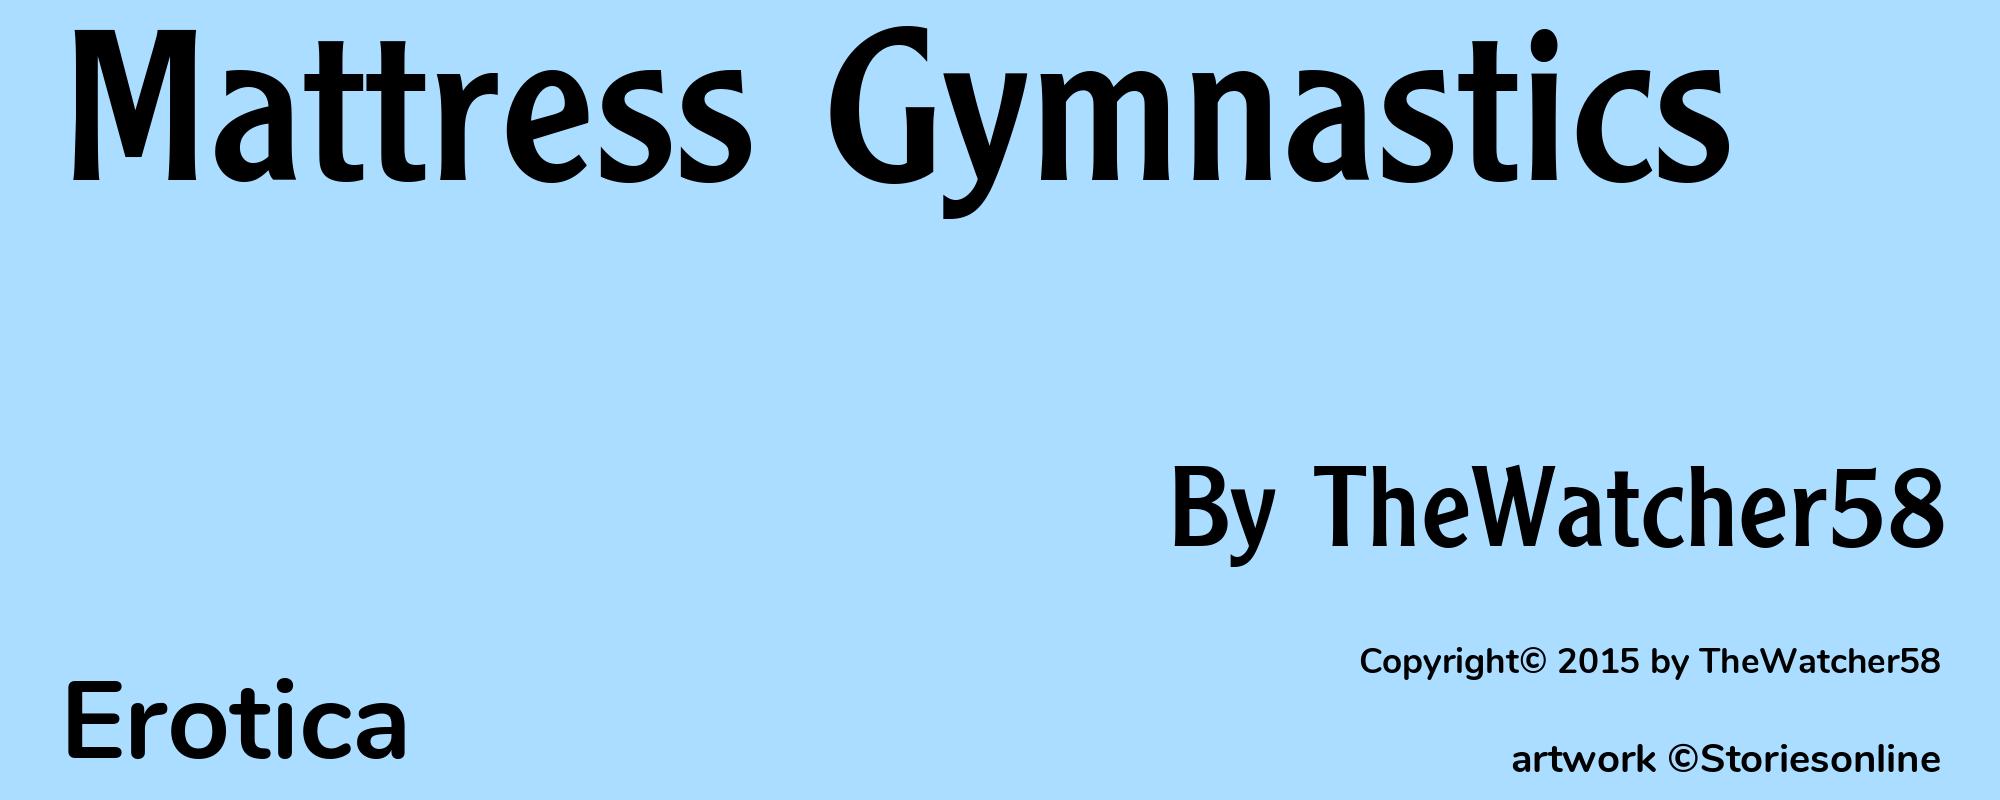 Mattress Gymnastics - Cover